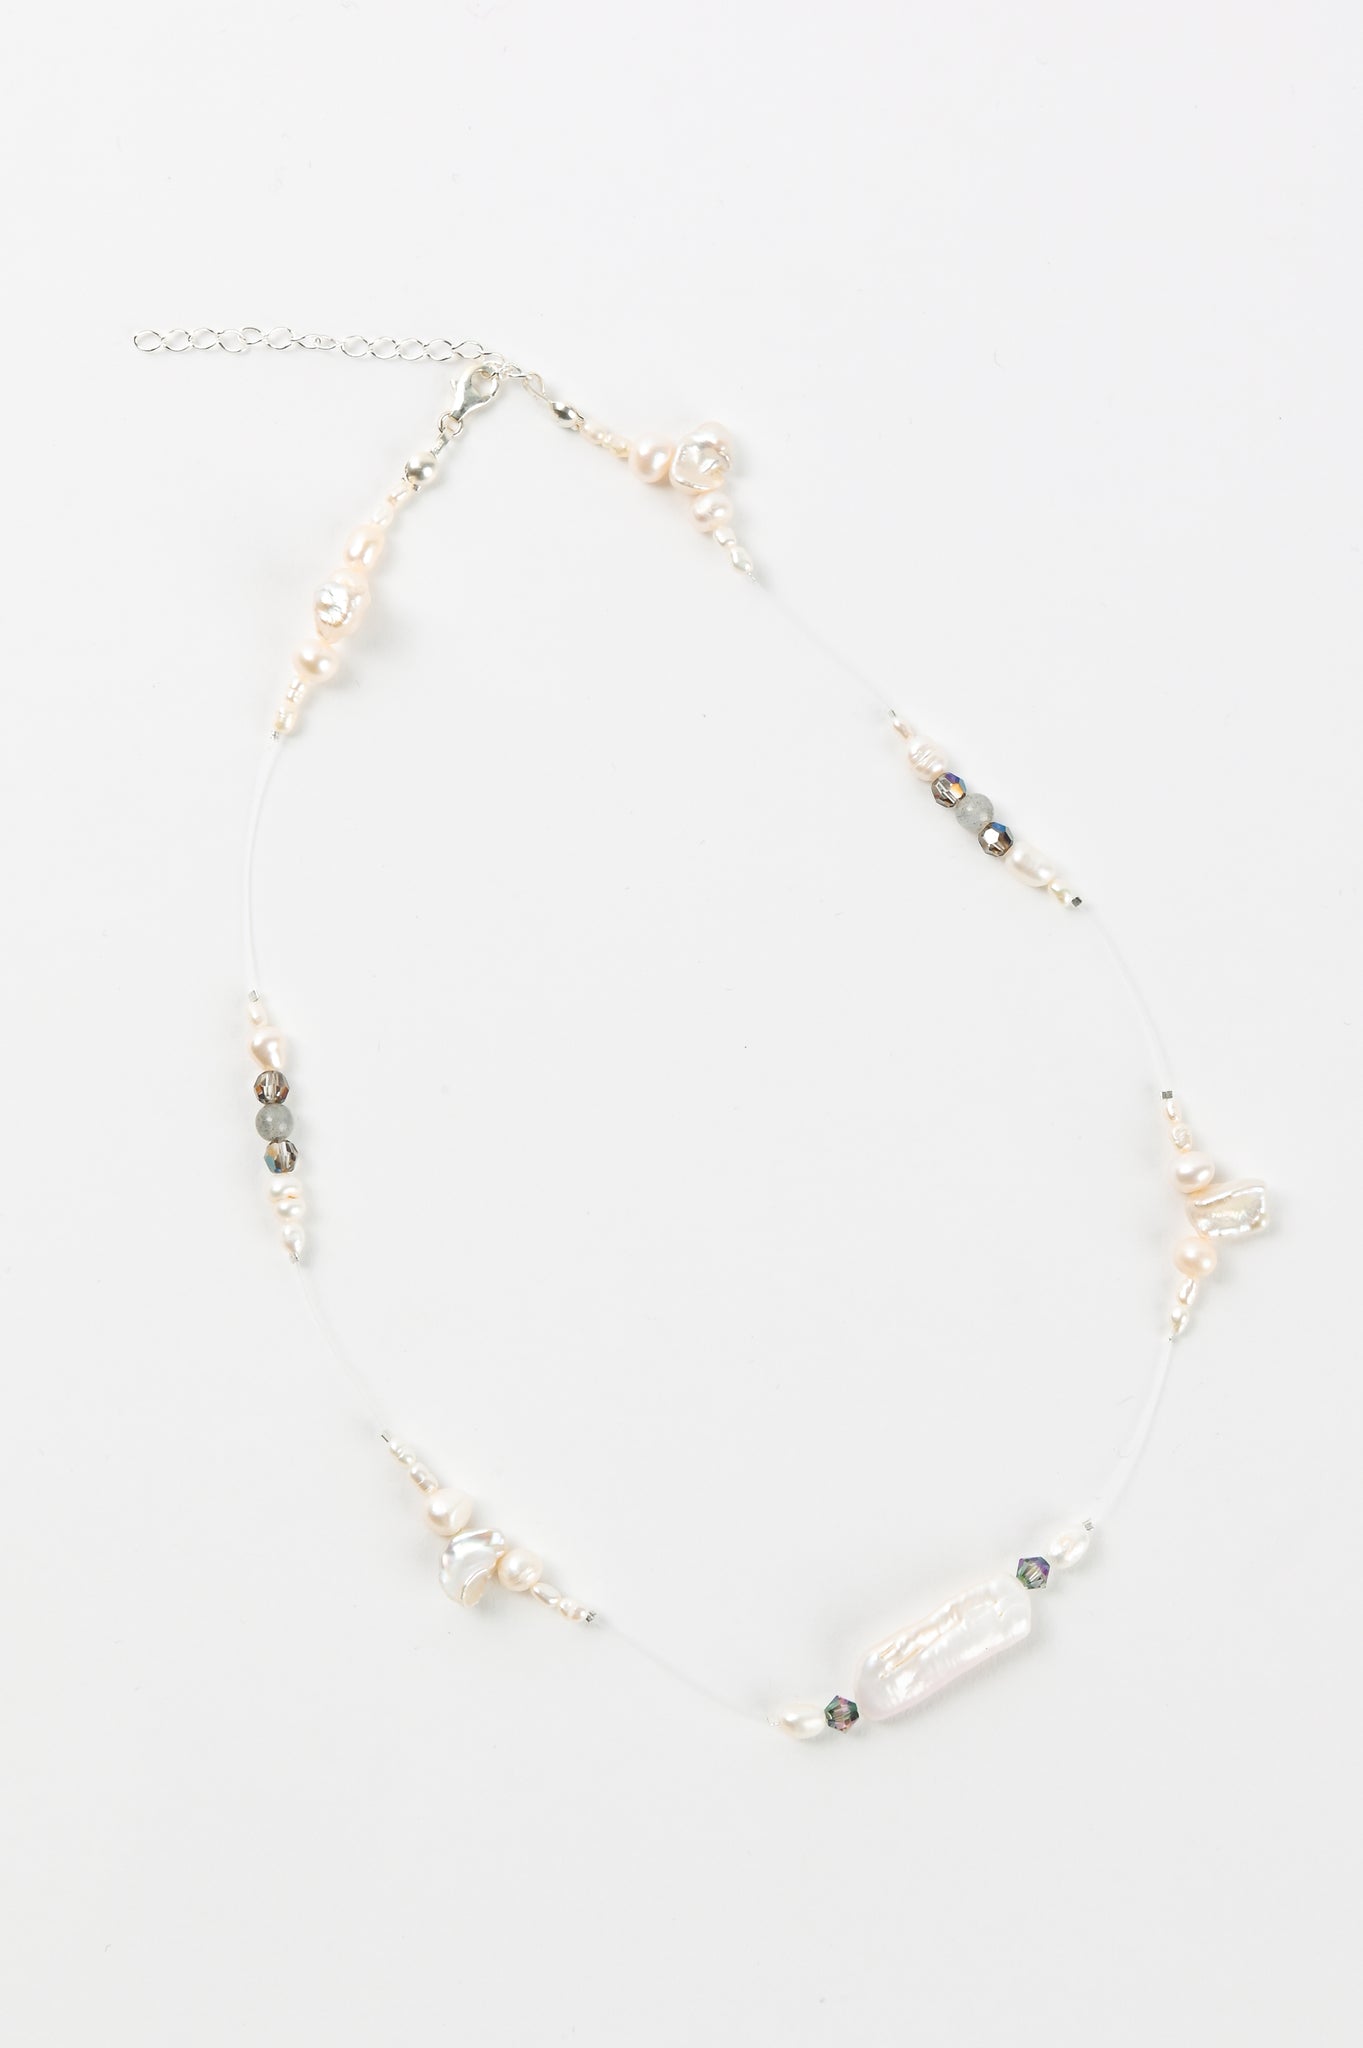 Nadia Ridiandries 'White Night' Necklace